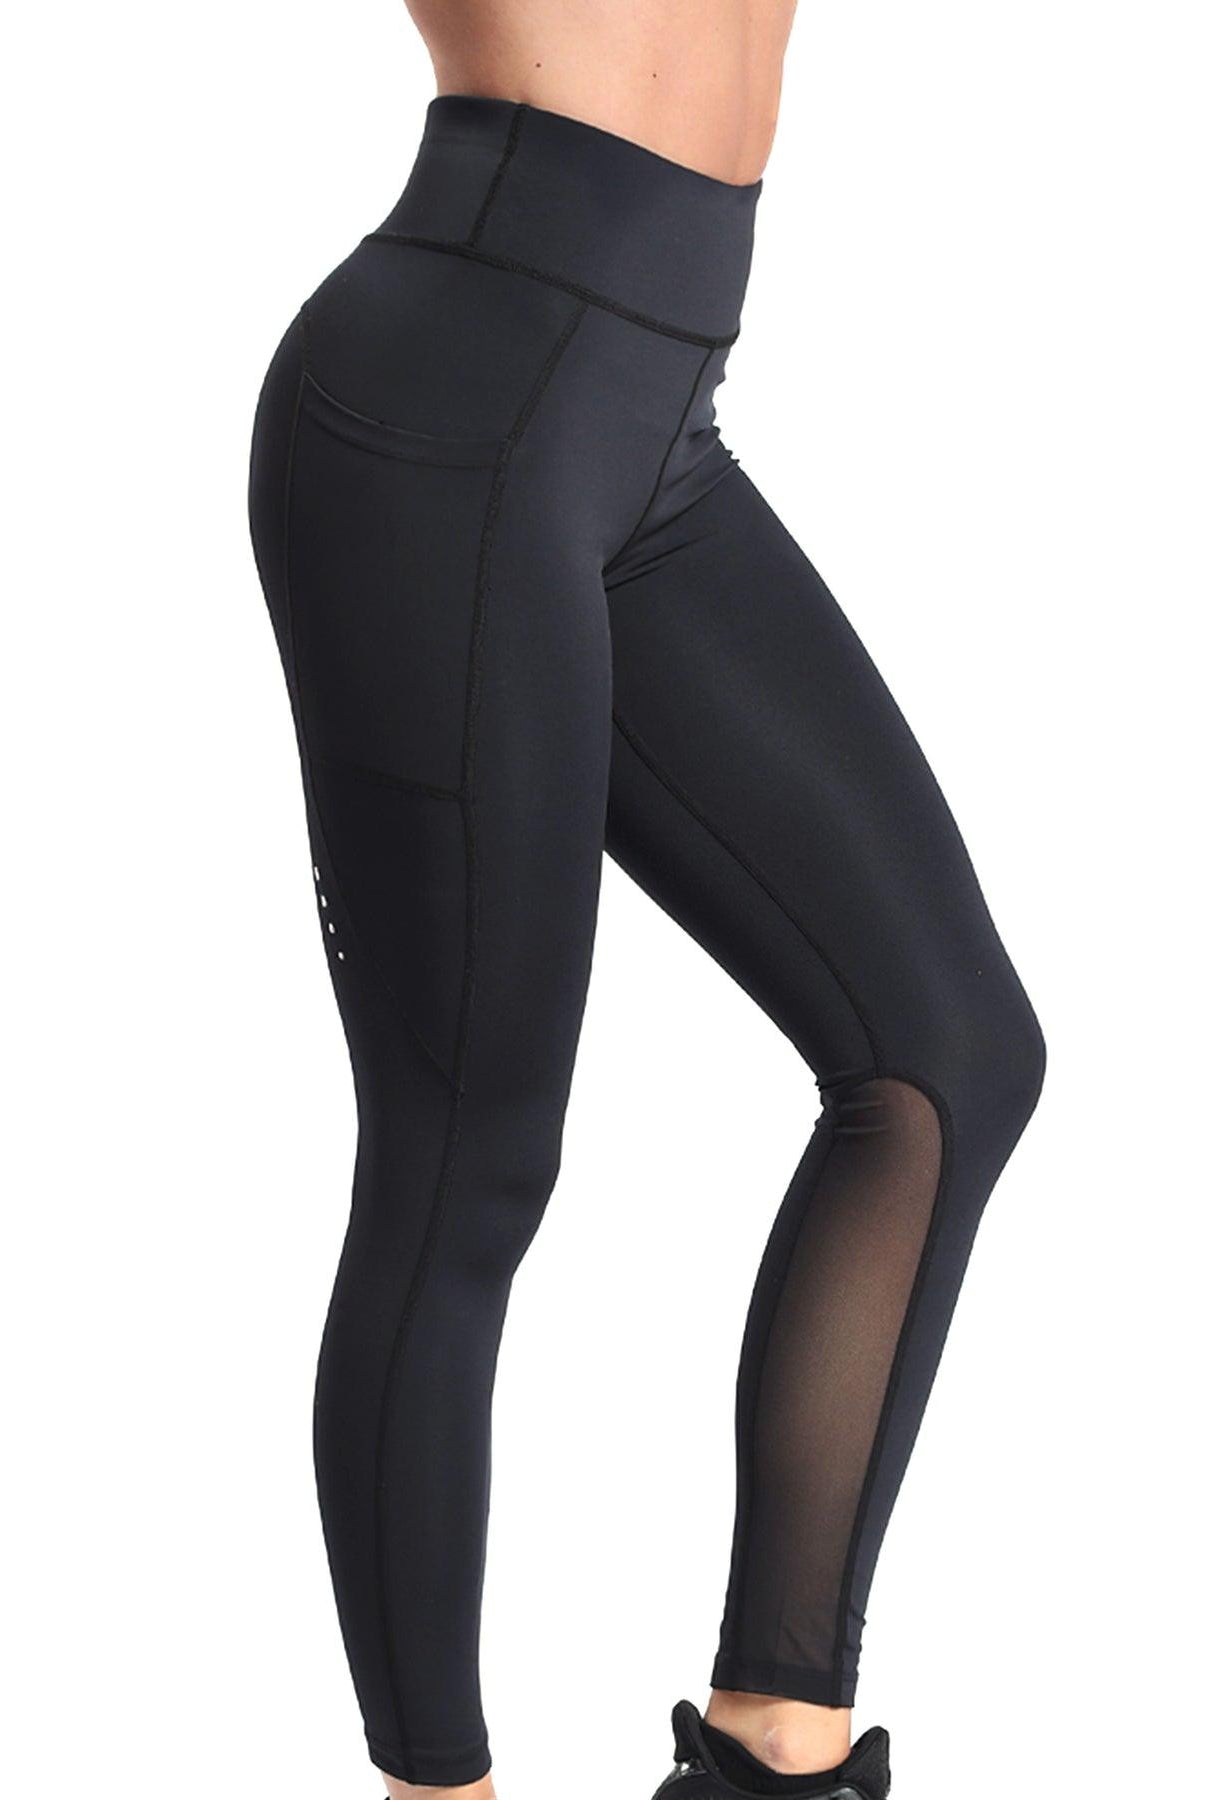 Women's Pants High Waist Yoga Pants Tummy Control Workout Pants For Women...